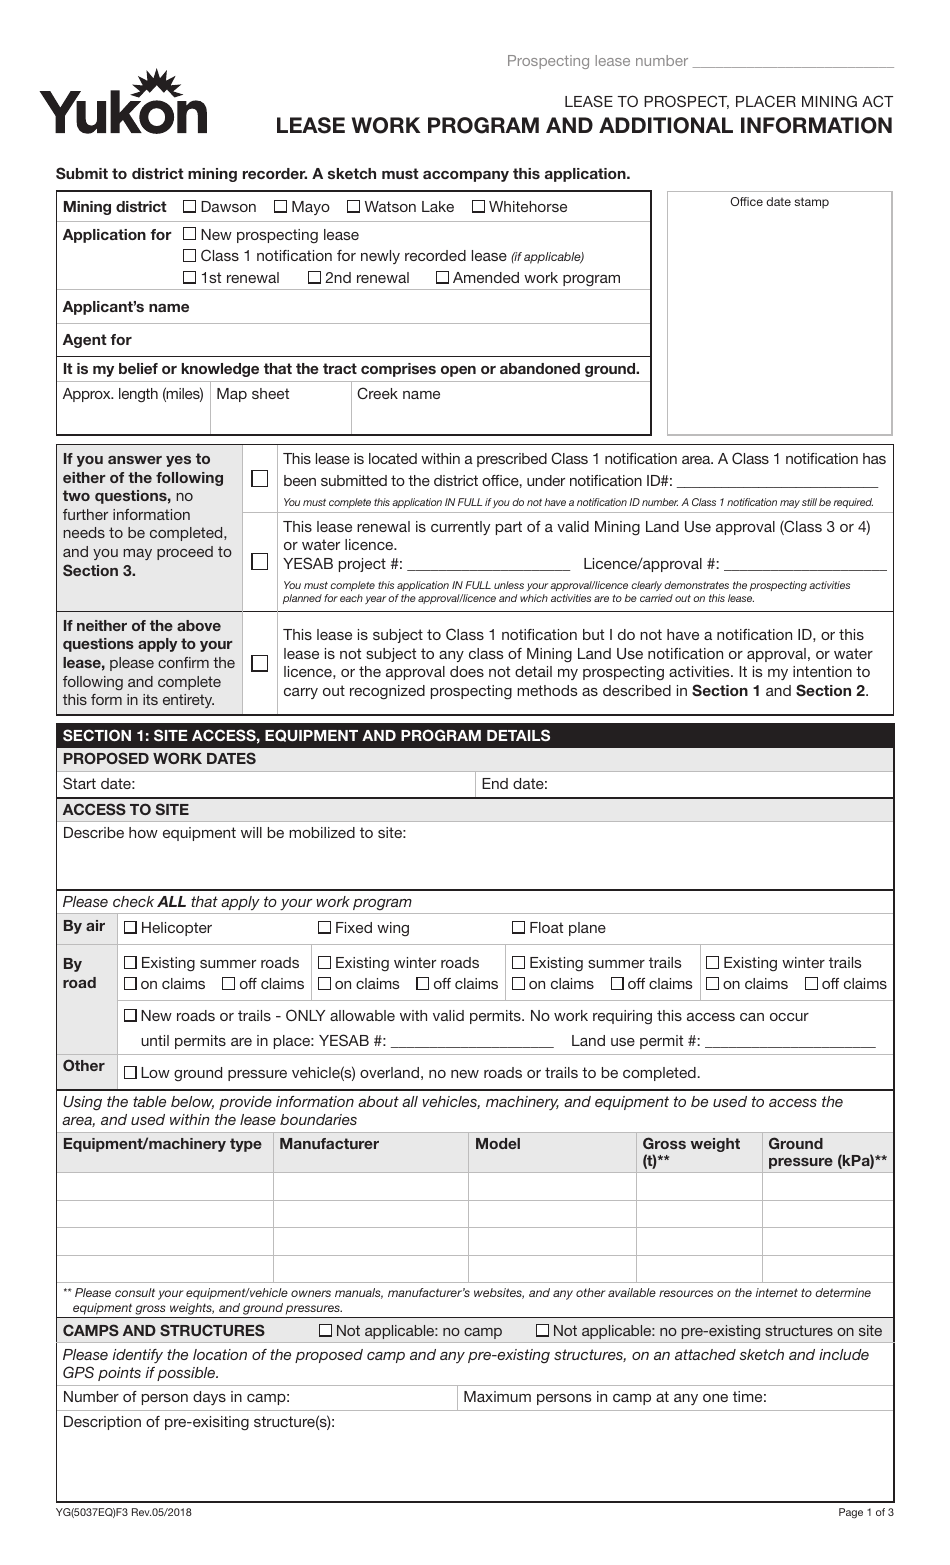 Form YG5037 Lease Work Program and Additional Information - Yukon, Canada, Page 1